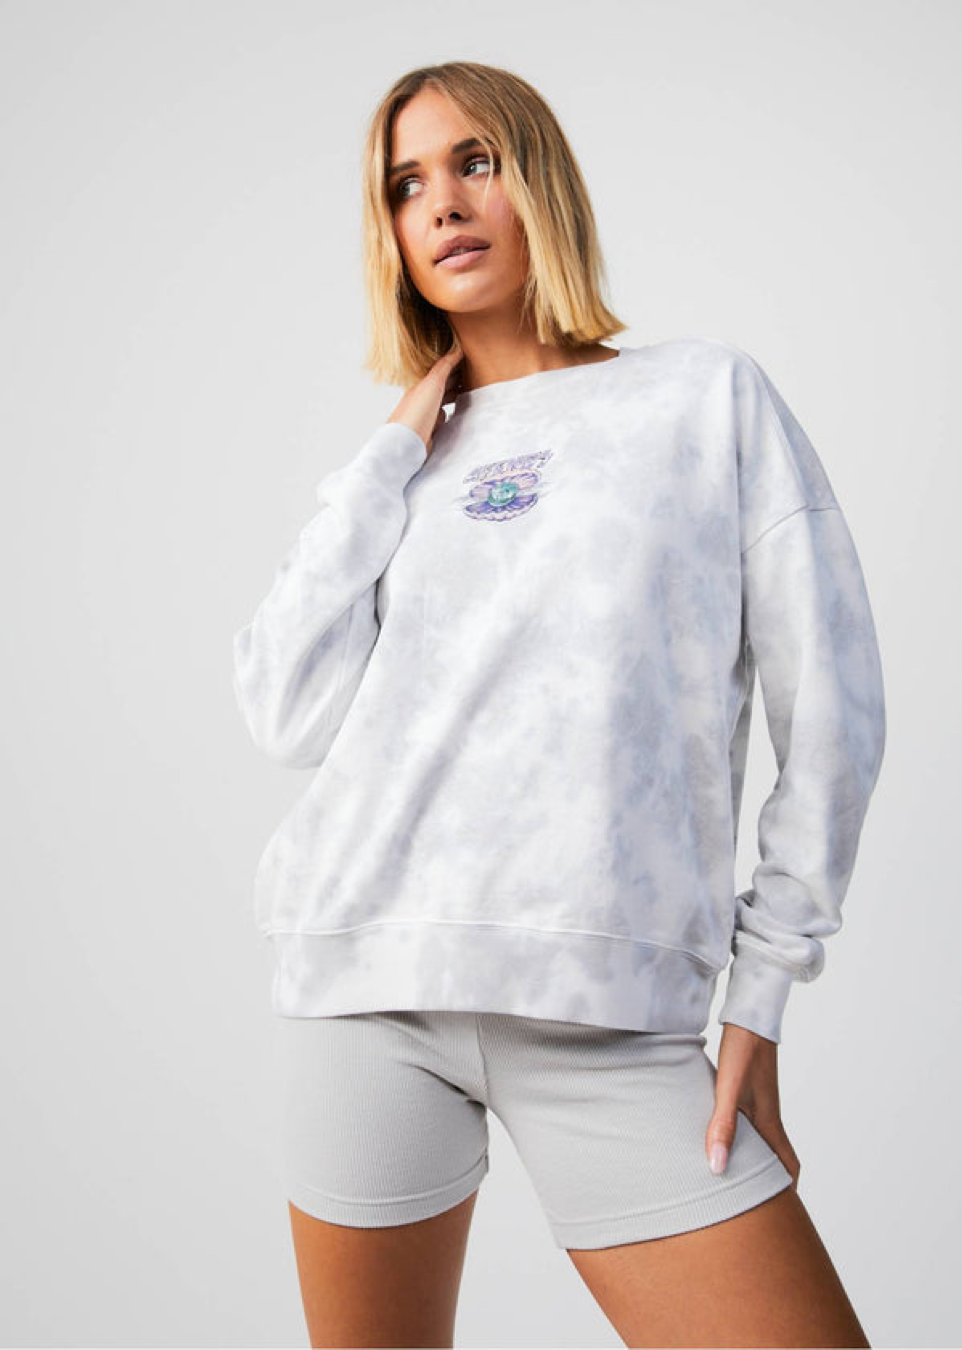 Pearla - Hemp Crew Neck Graphic Sweater / Smoke Wash